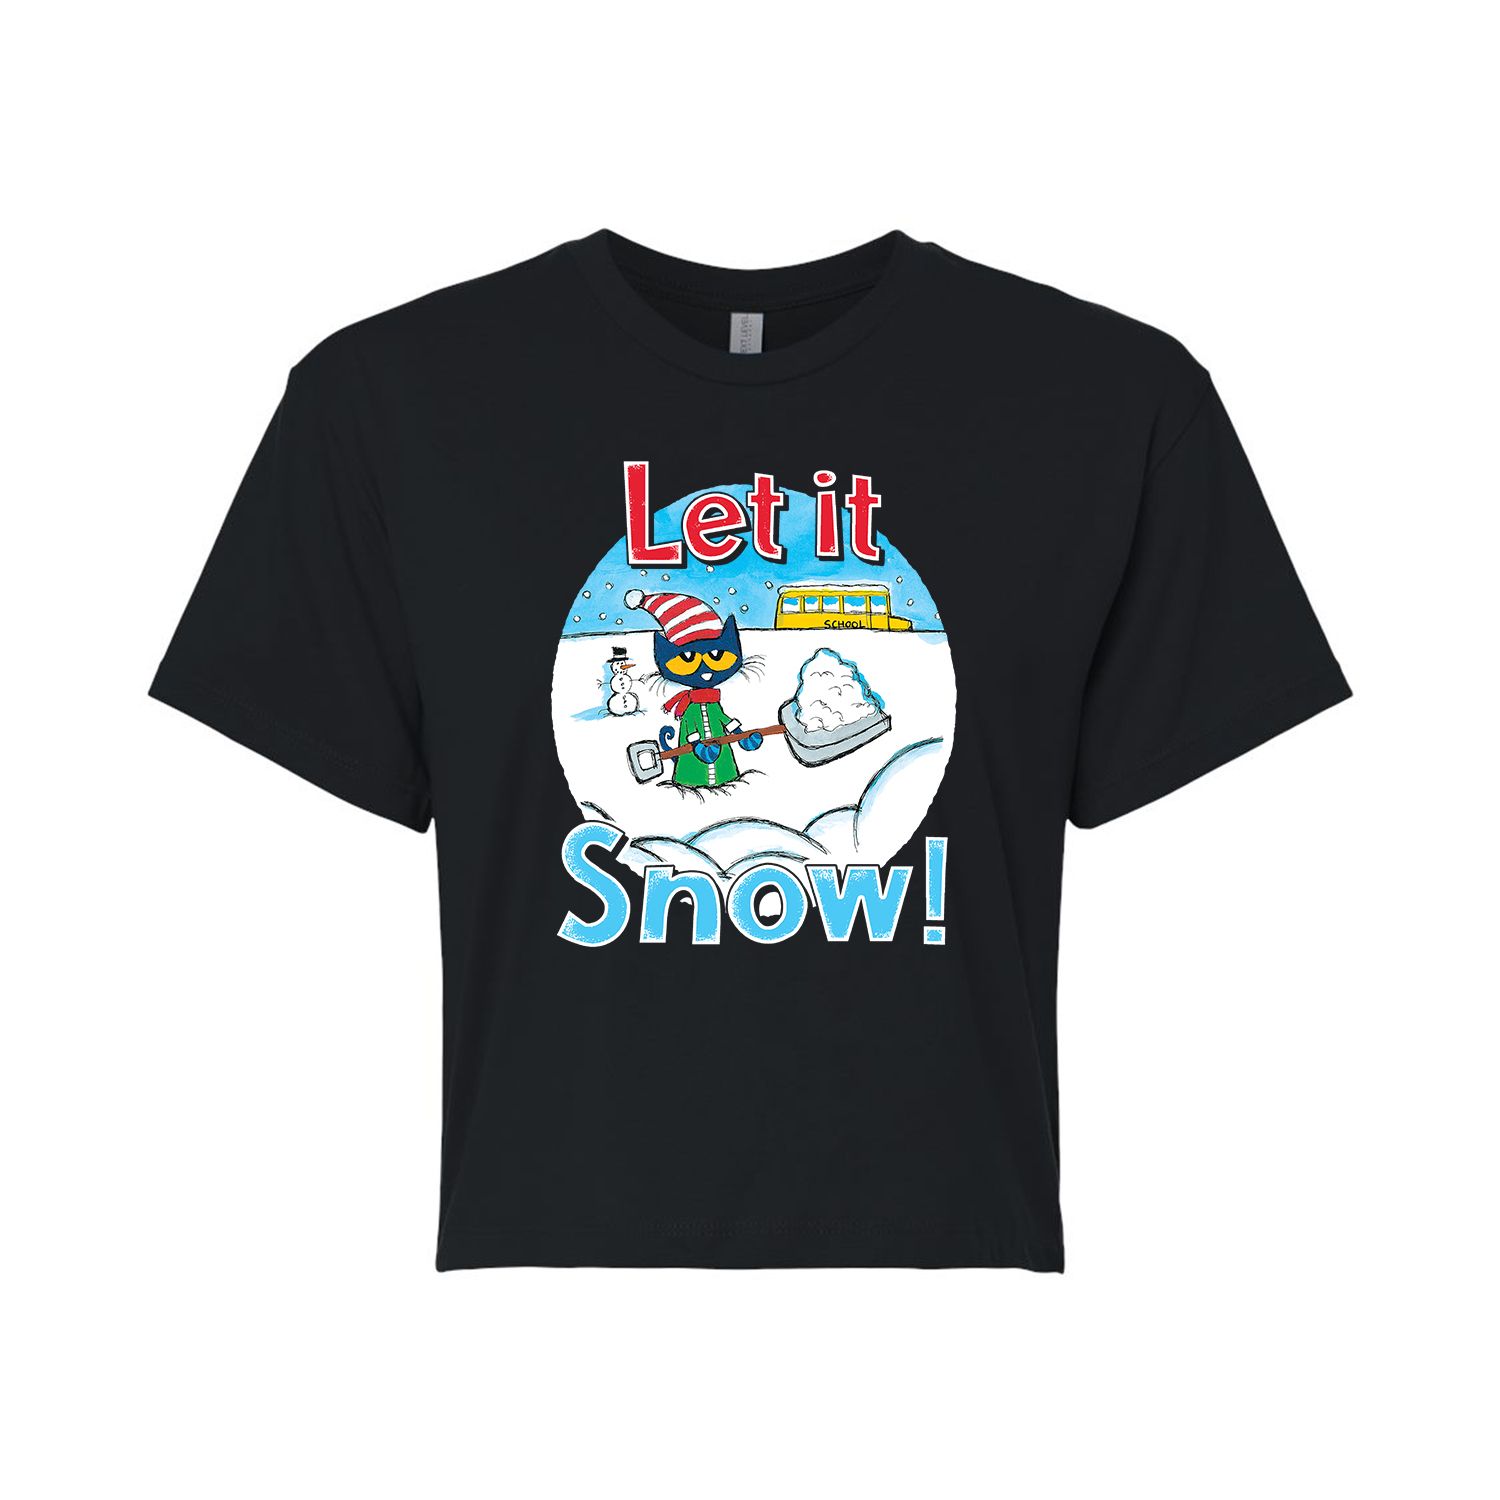 Укороченная футболка с рисунком Pete The Cat Let It Snow для юниоров Licensed Character укороченная футболка с рисунком pete the cat making friends для юниоров licensed character